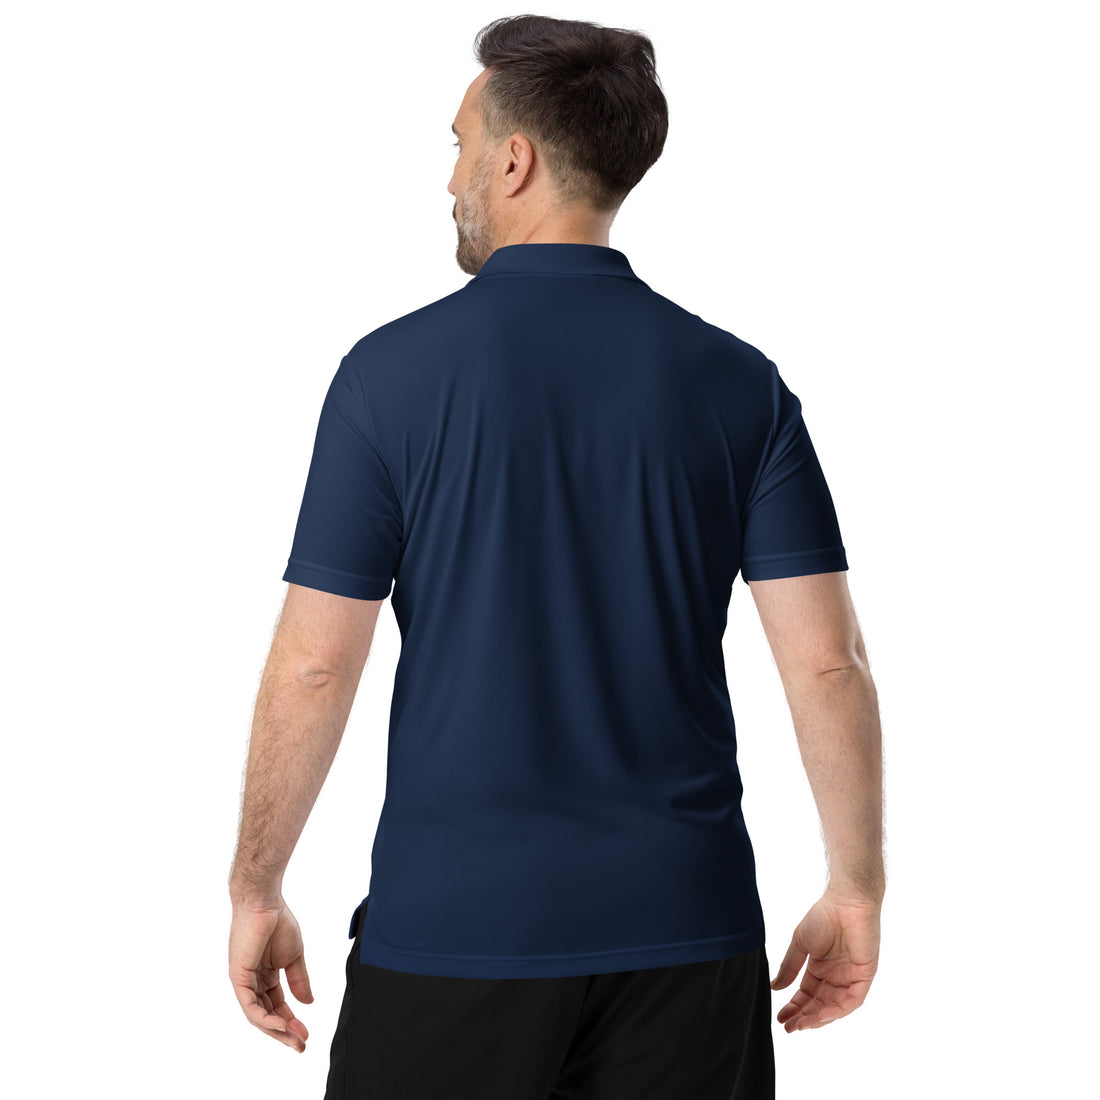 Guidepost Apparel - adidas performance polo shirt